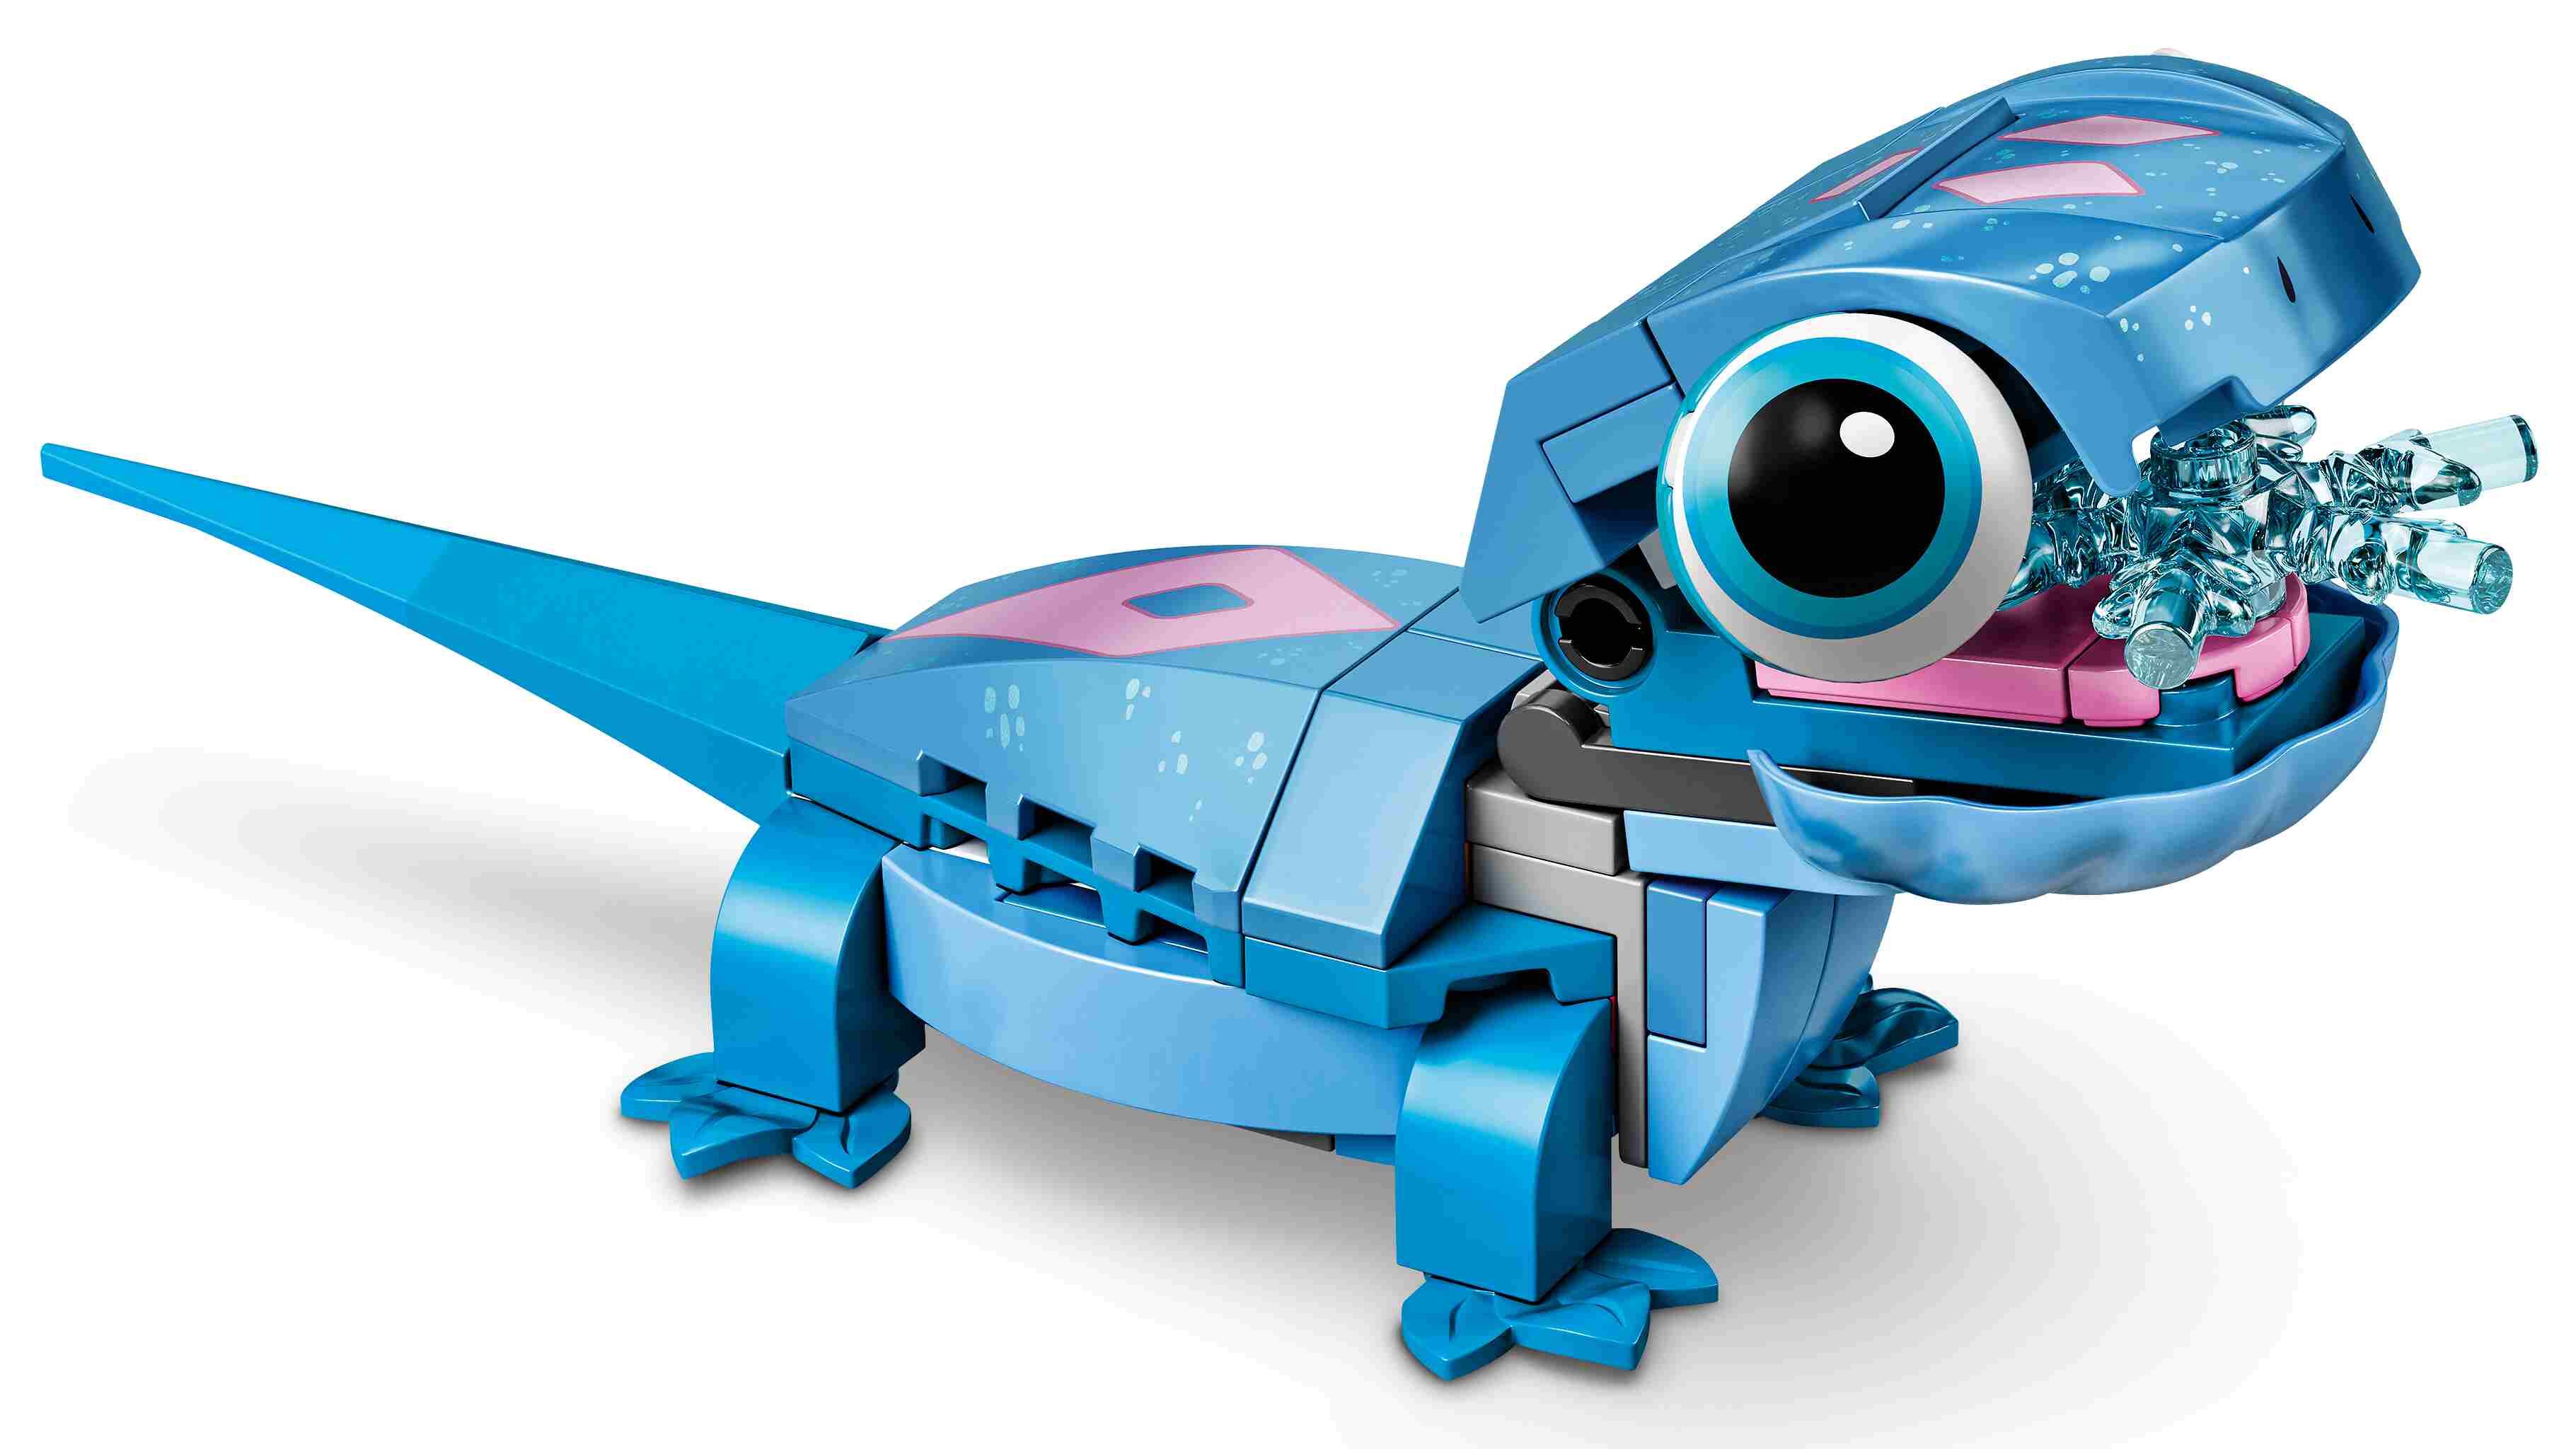 LEGO 43186 Disney Princess Salamander Bruni, Frozen 2